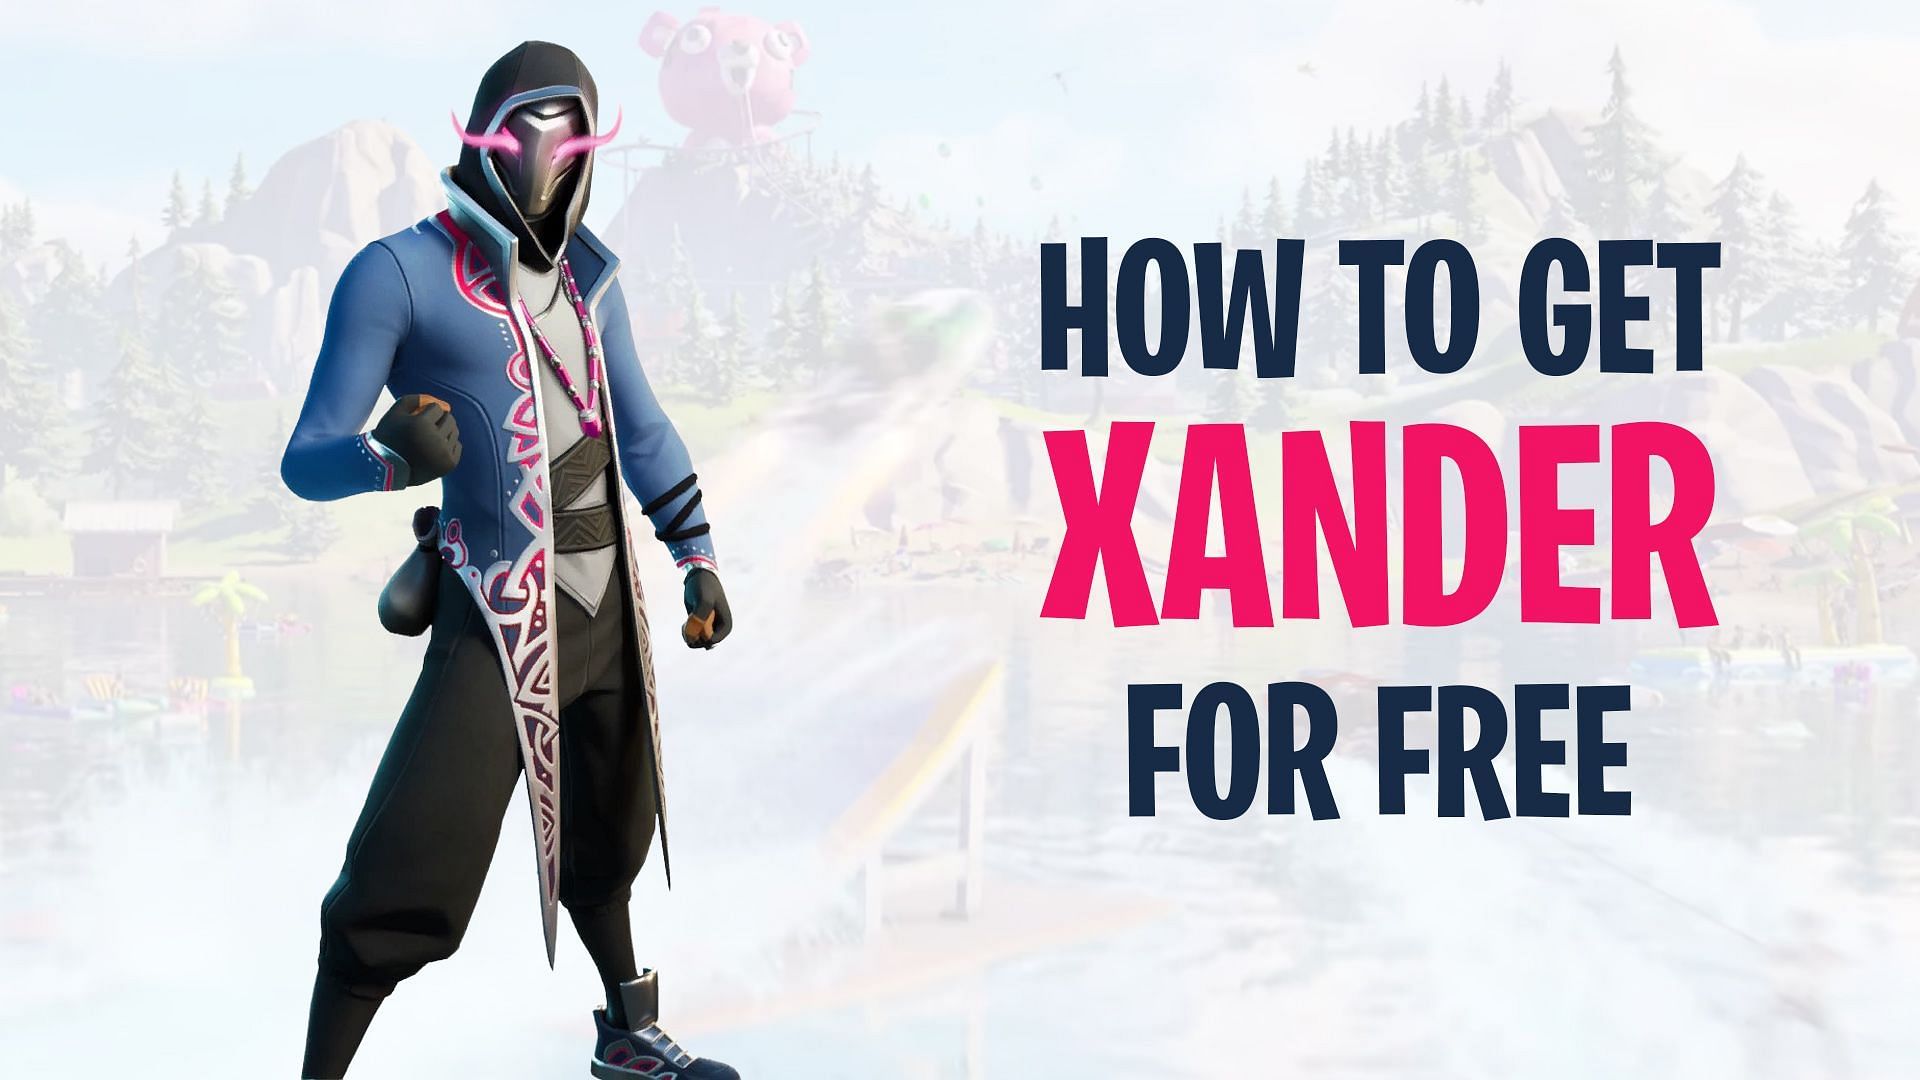 Fortnite players can unlock the Xander skin for free (Image via Sportskeeda)